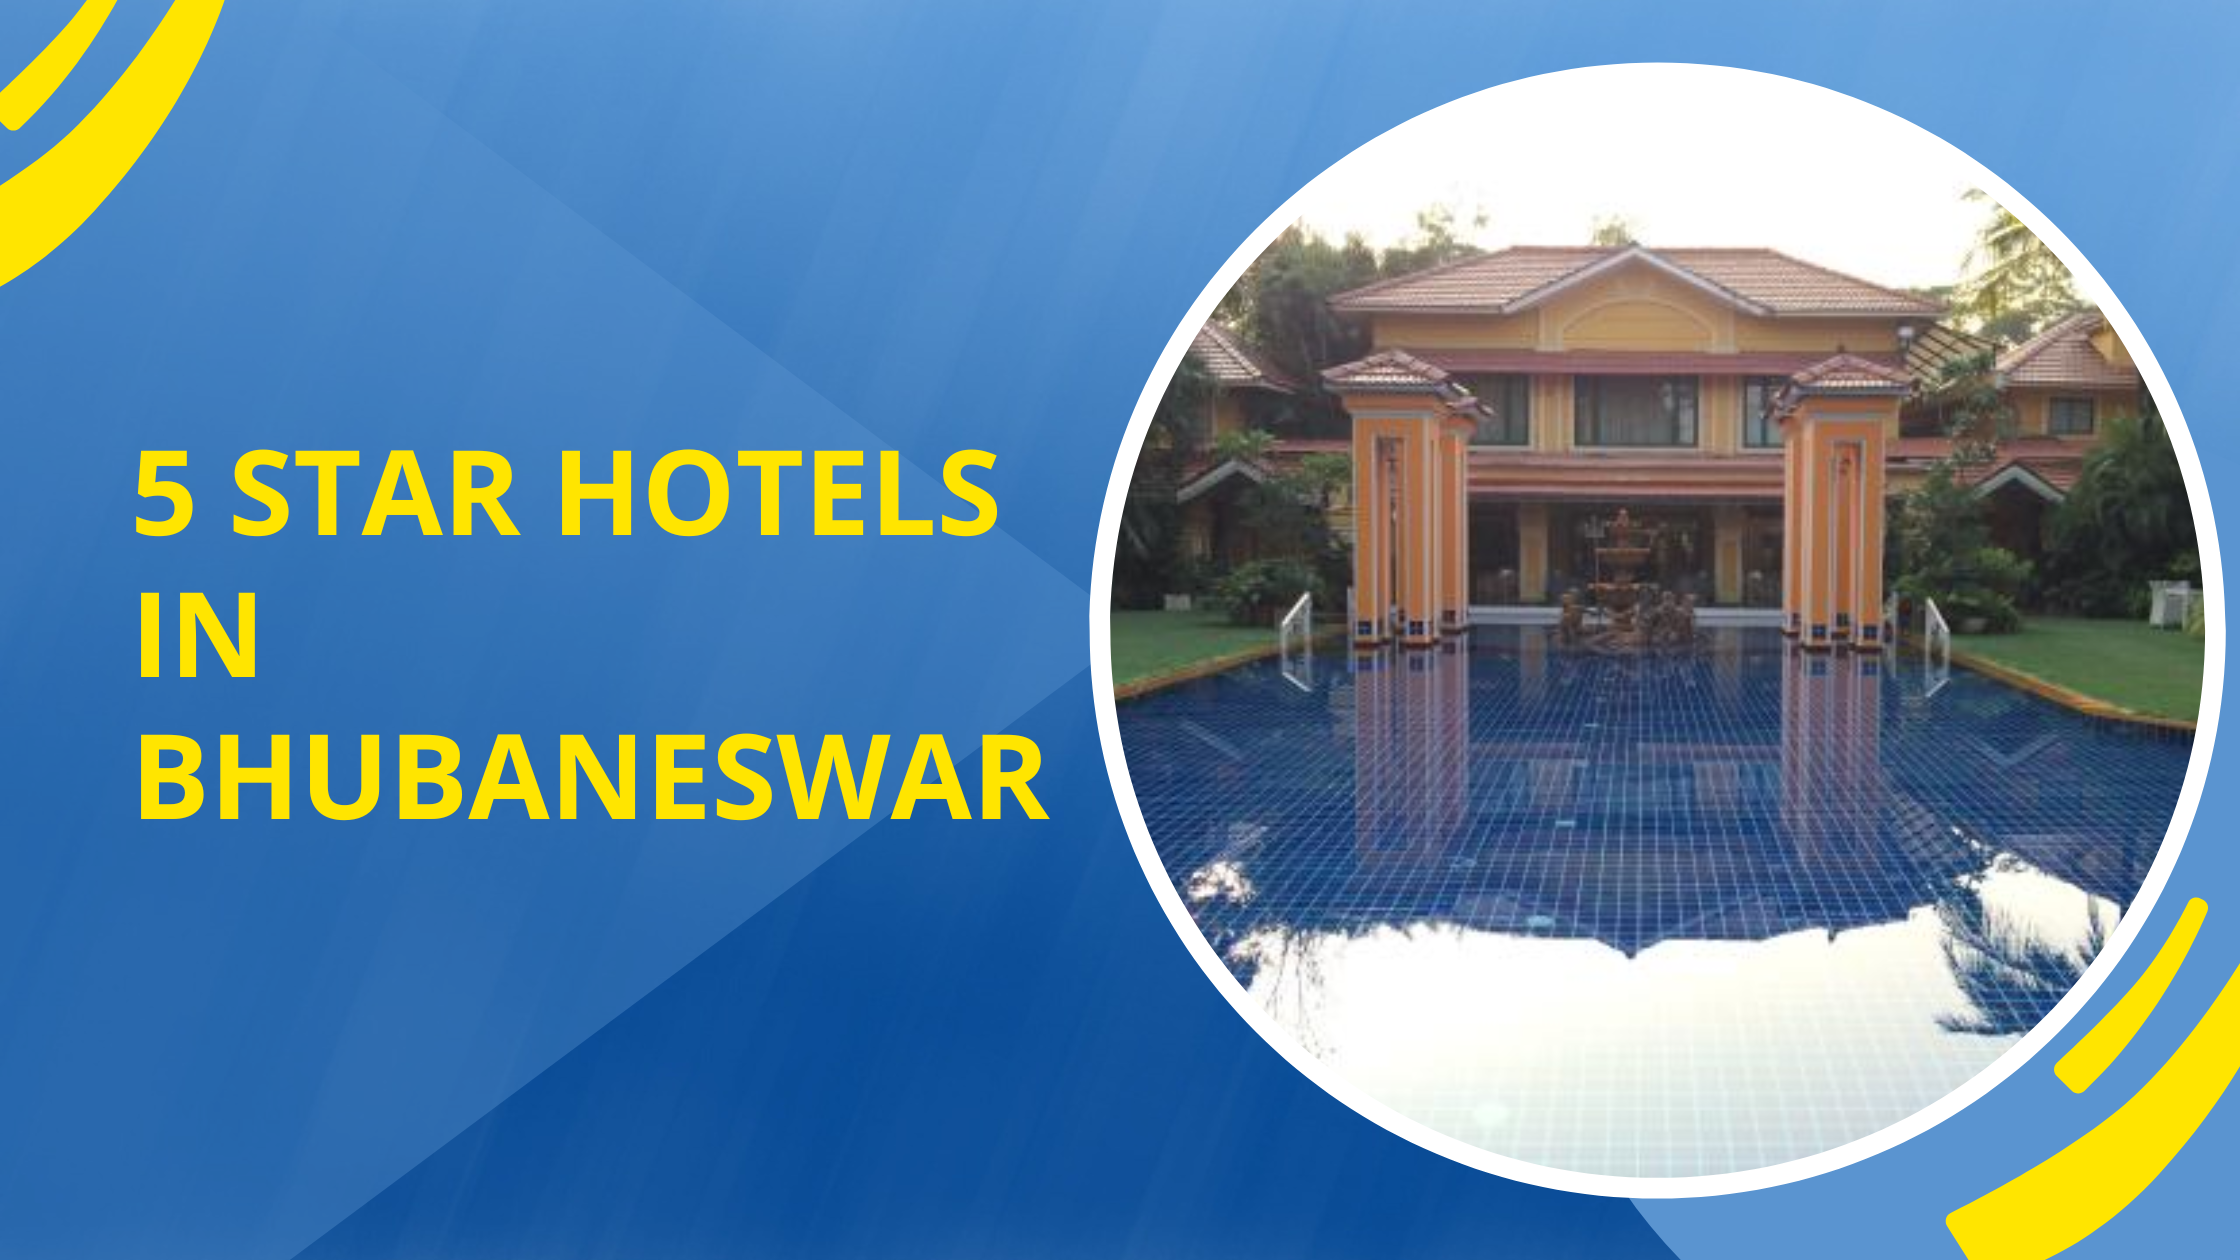 Top 3 5 Star Hotels In Bhubaneswar